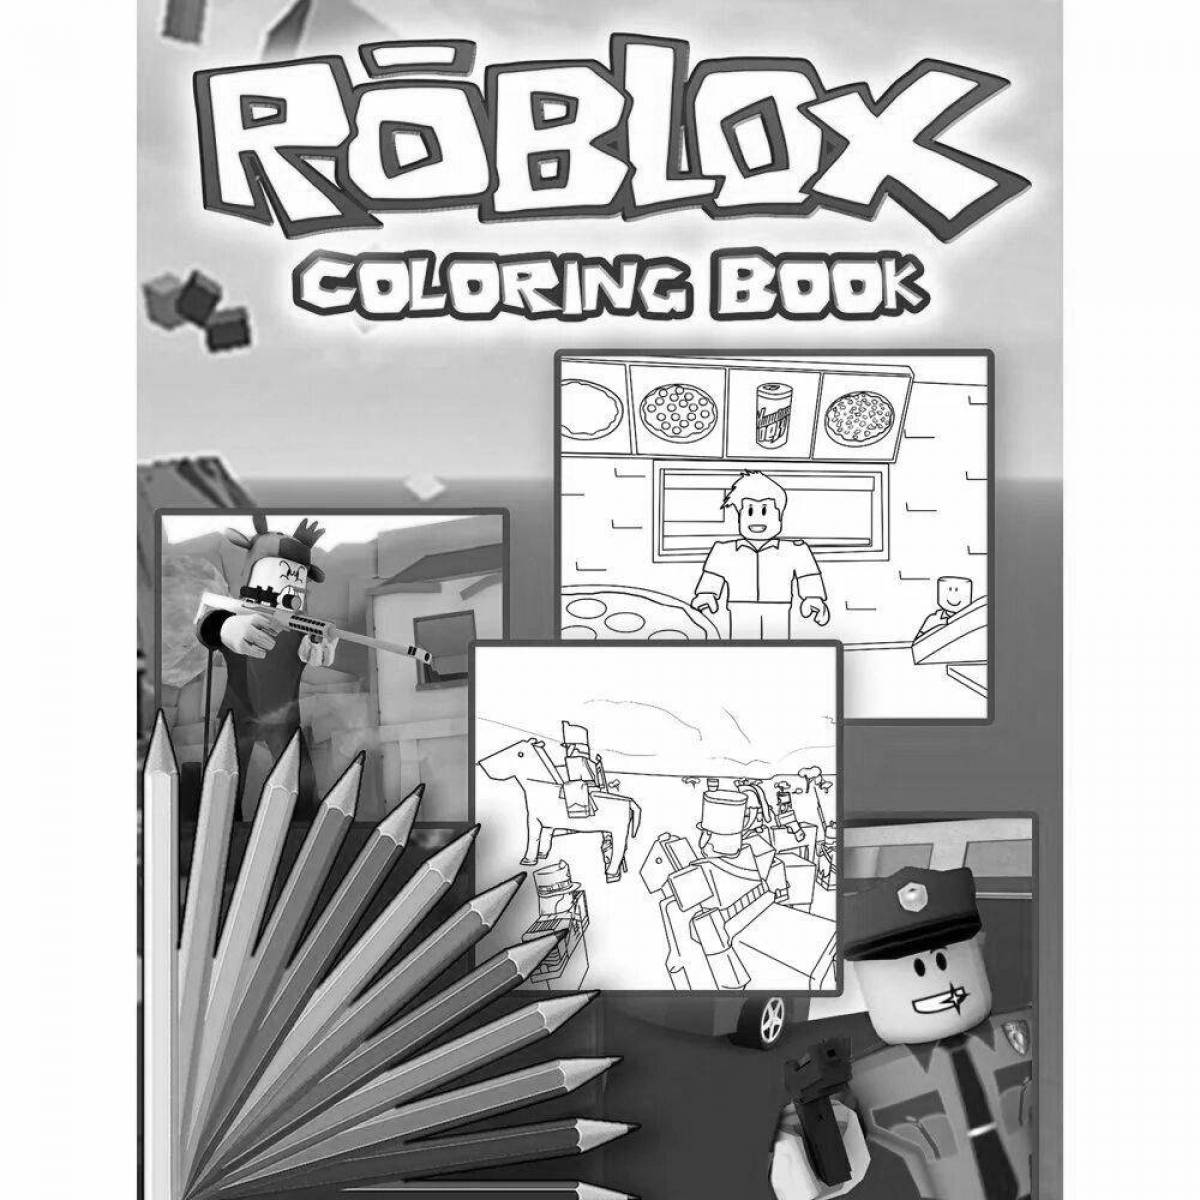 Yoshi's incredible roblox coloring book